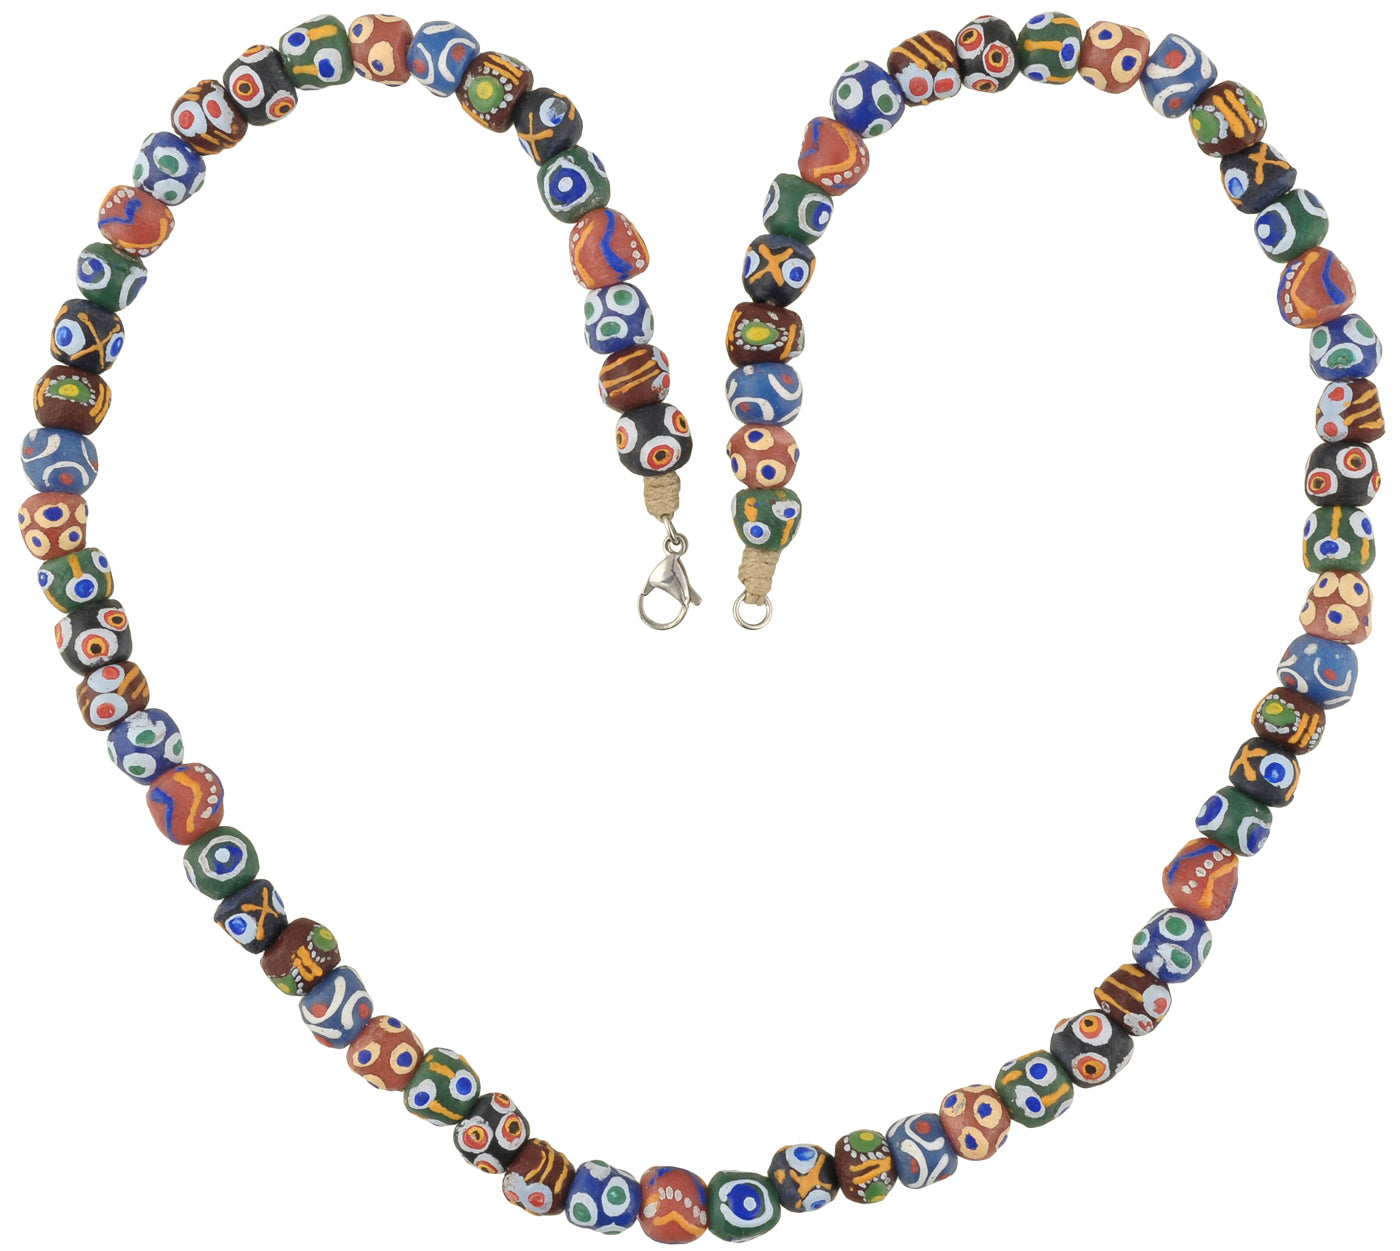 Handmade recycled glass beads necklace ready to wear jewelry Krobo Ghana Africa - Tribalgh